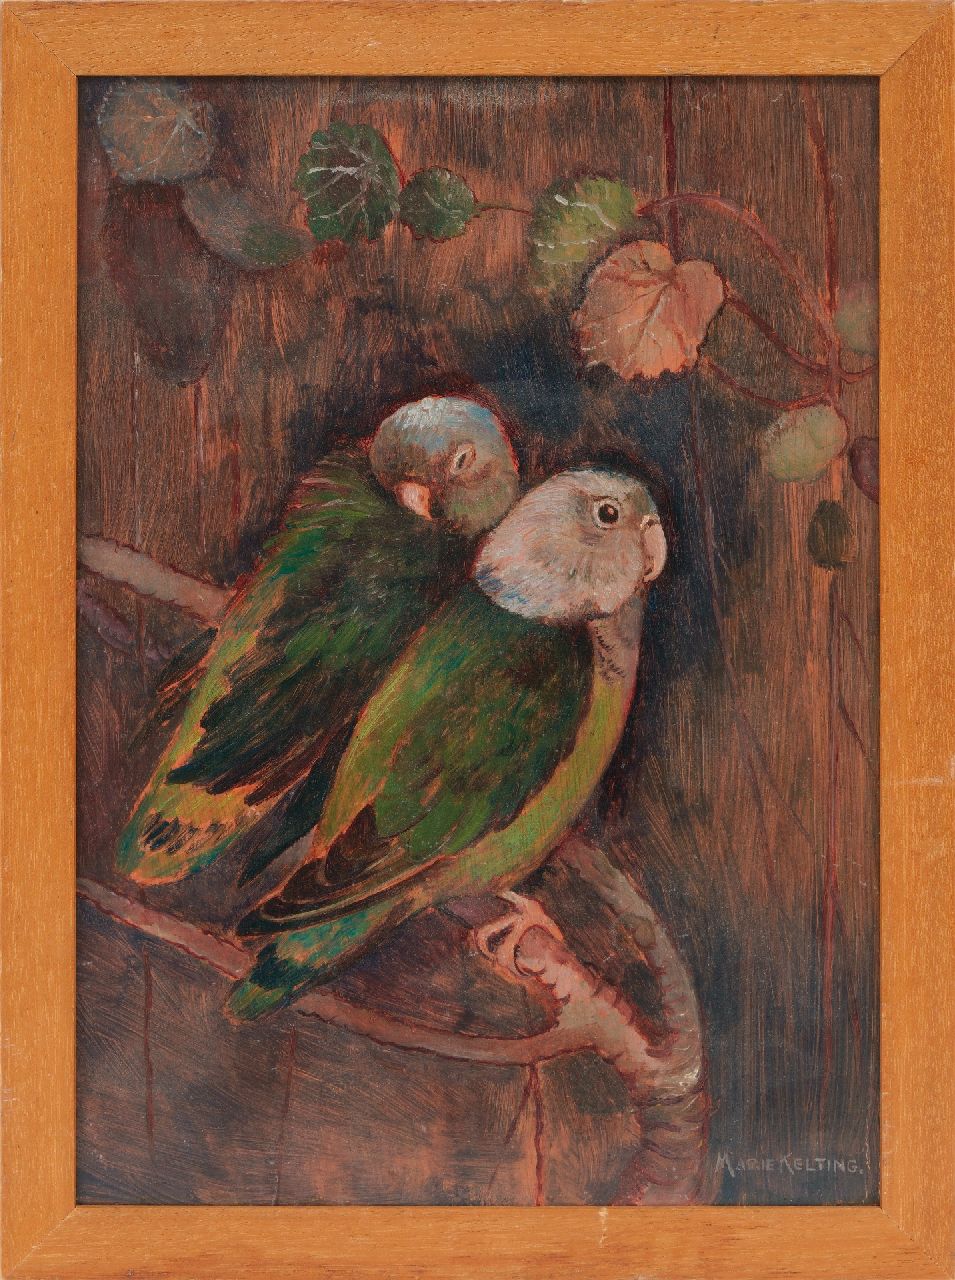 Kelting M.  | Maria 'Marie' Kelting, Twee groene parkieten, olieverf op board 23,1 x 16,6 cm, gesigneerd rechtsonder